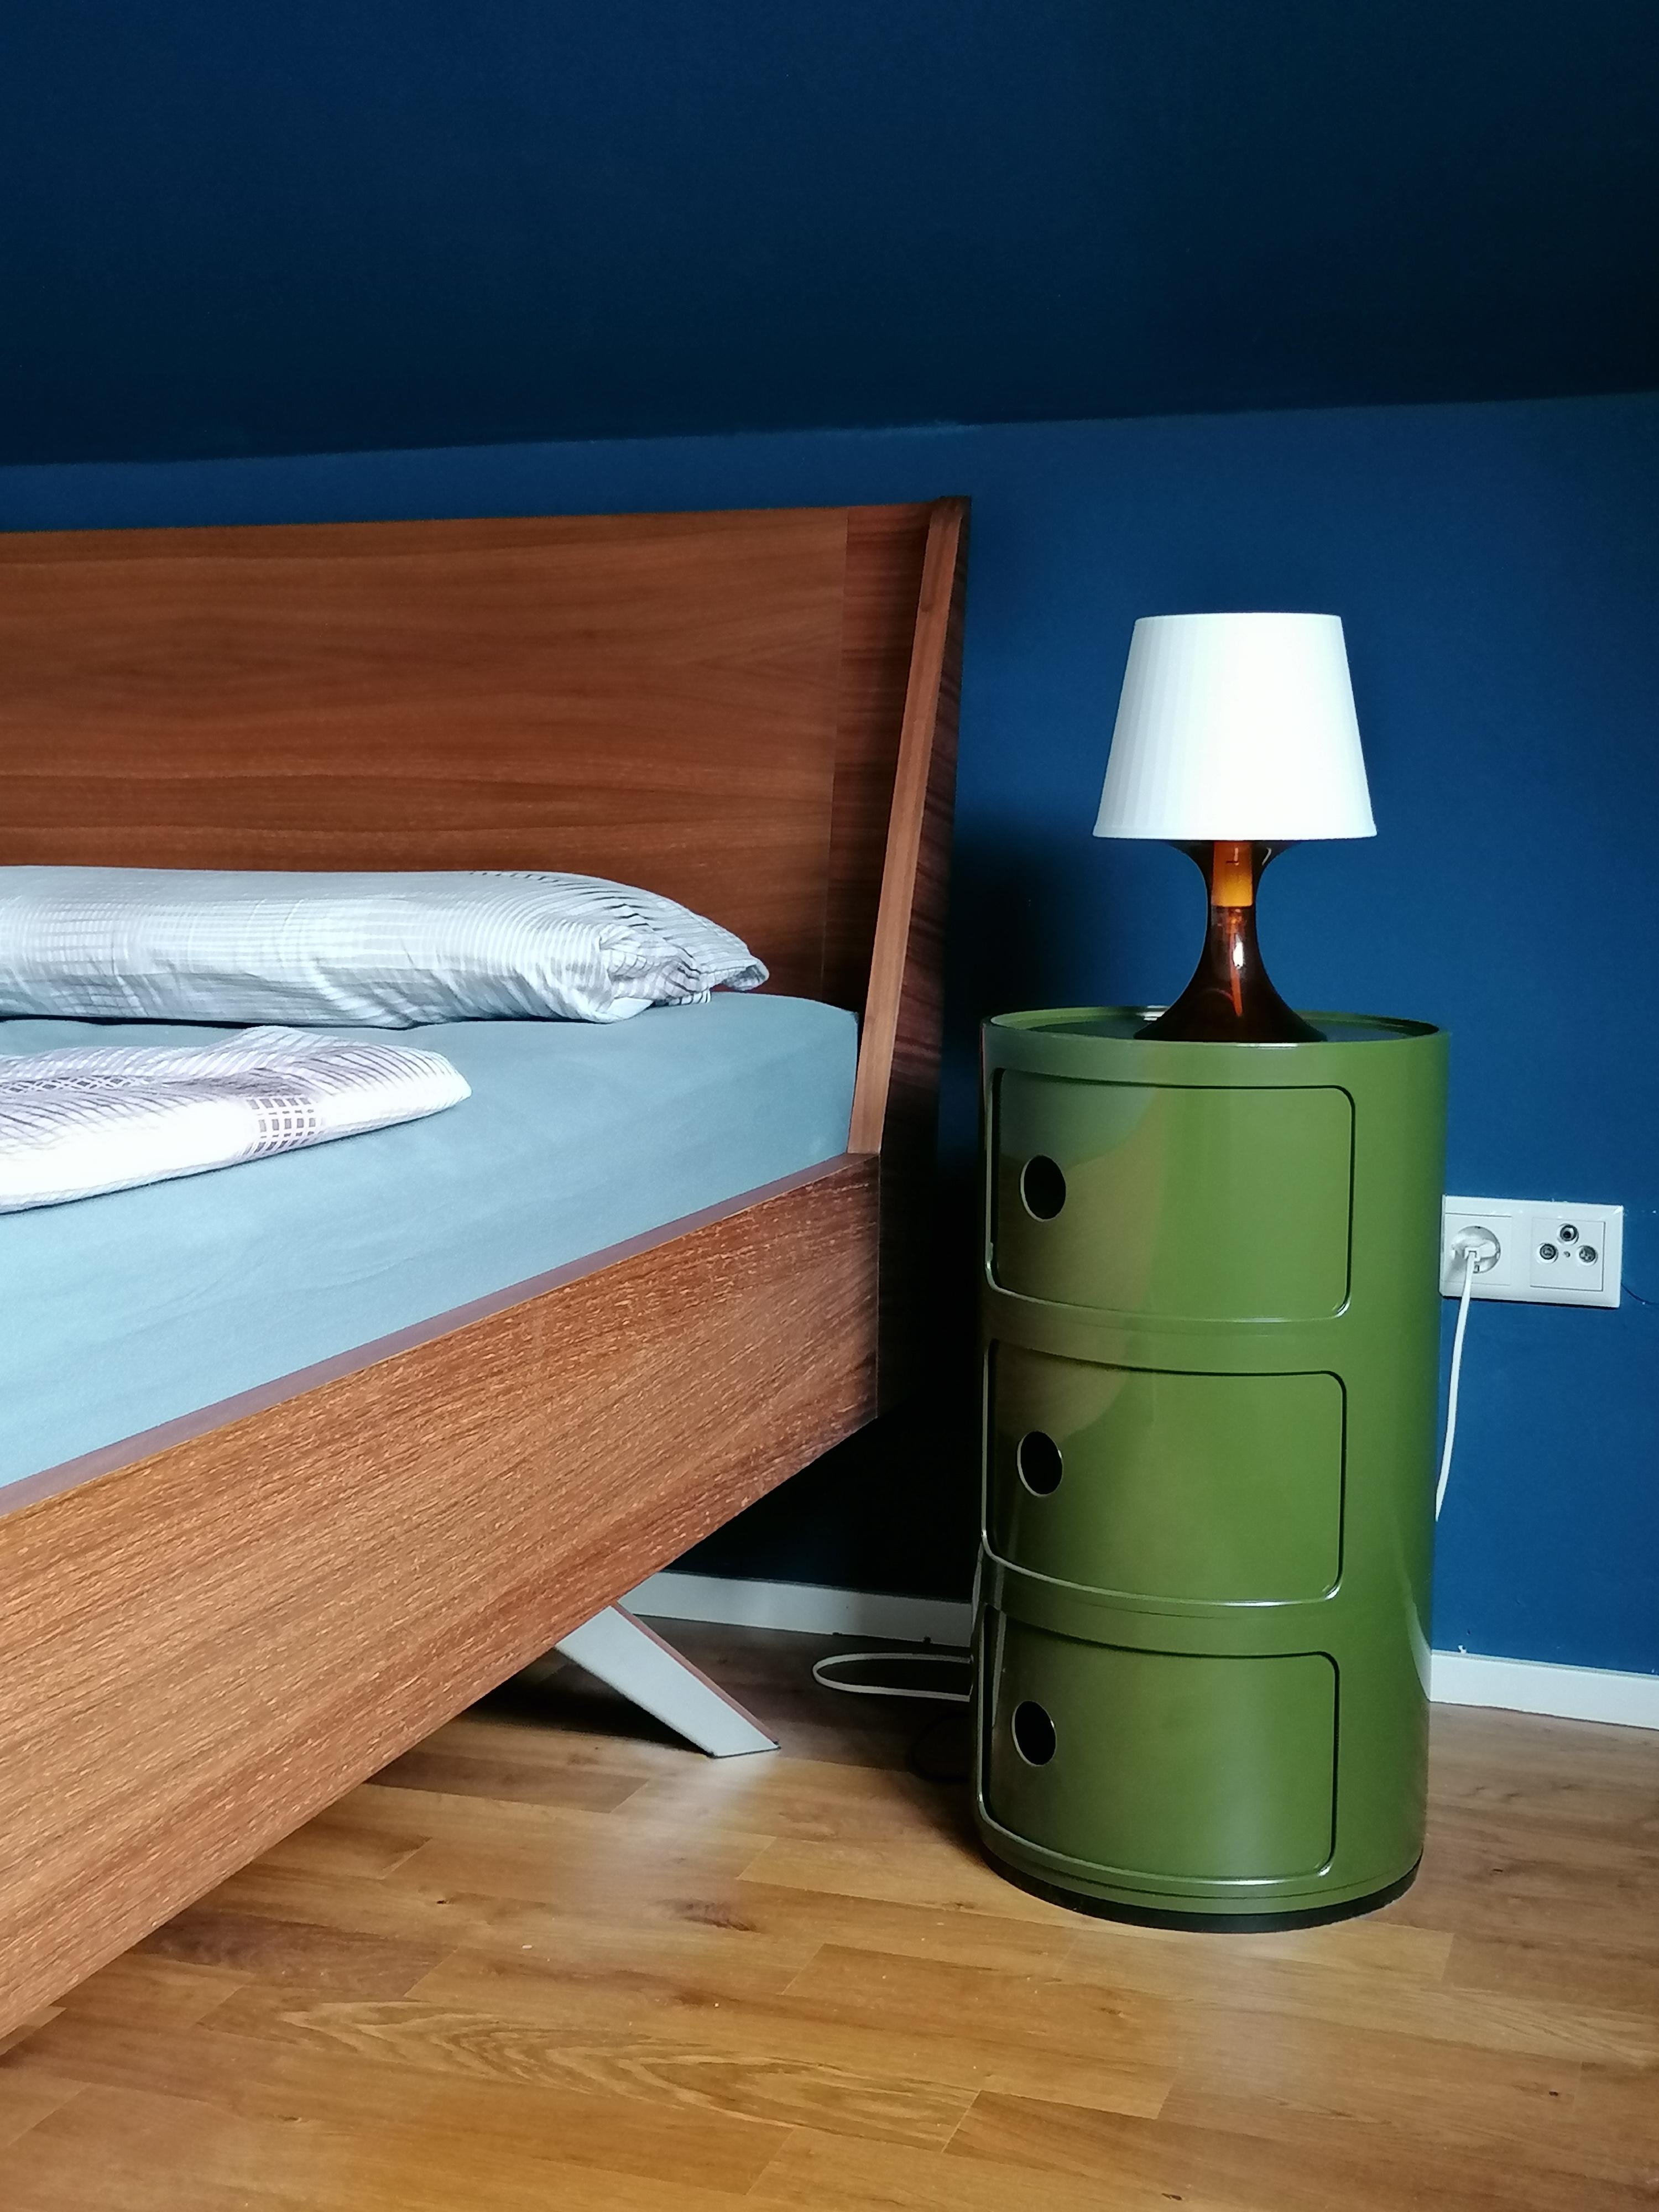 #Schlafzimmer #minimal in #Farbe
#componibili